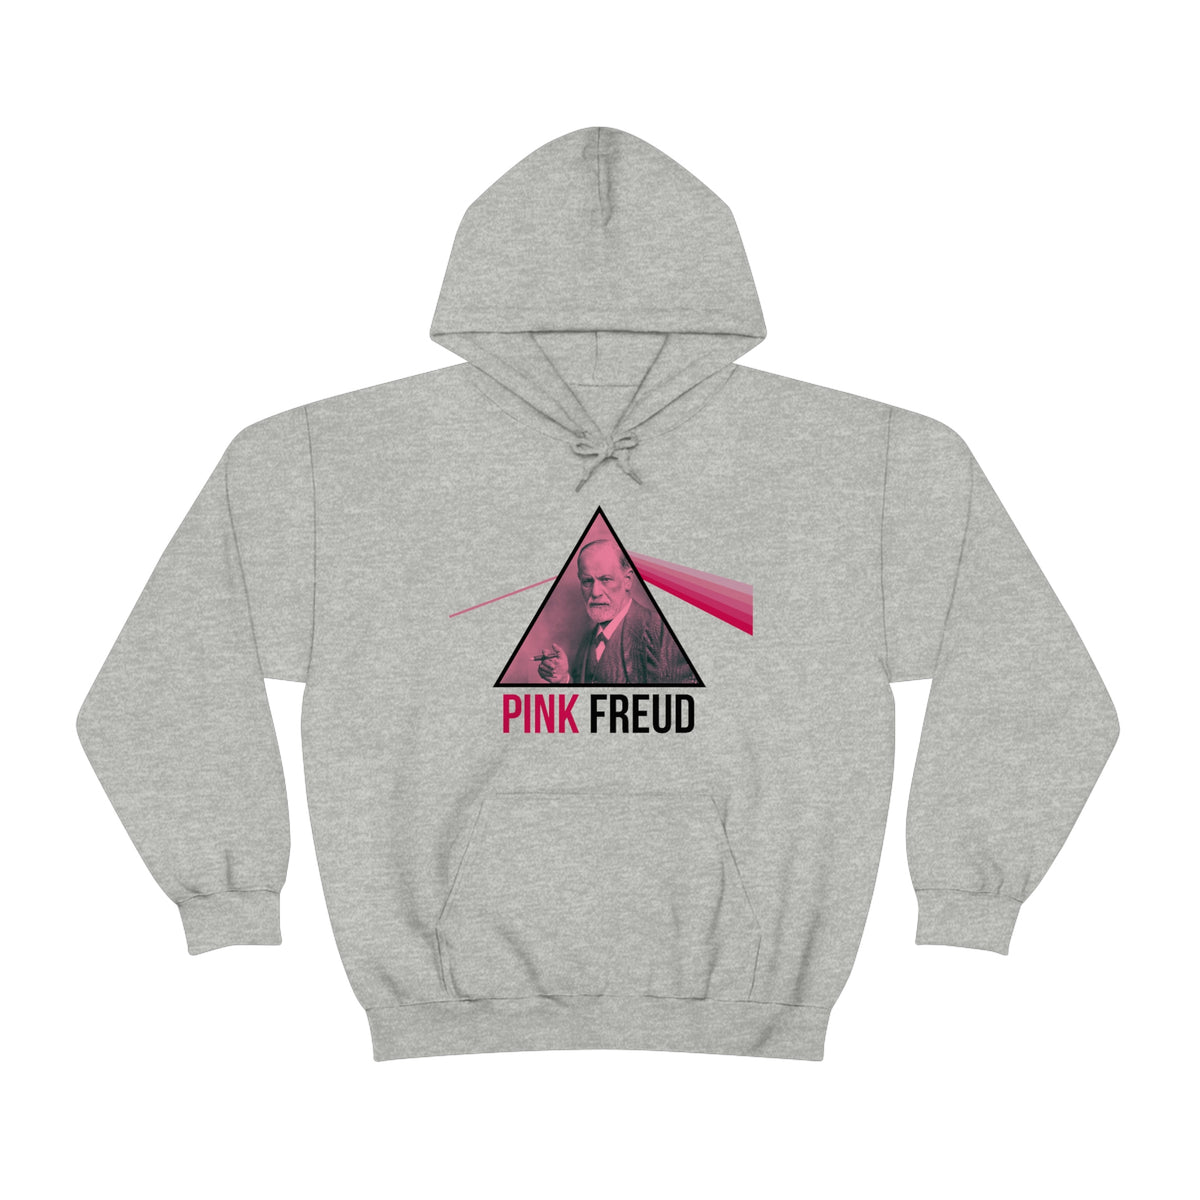 Pink Freud School Psychologist Counselor Shirt | Psychology Gift | Super Soft Tshirt | Unisex Hooded Sweatshirt